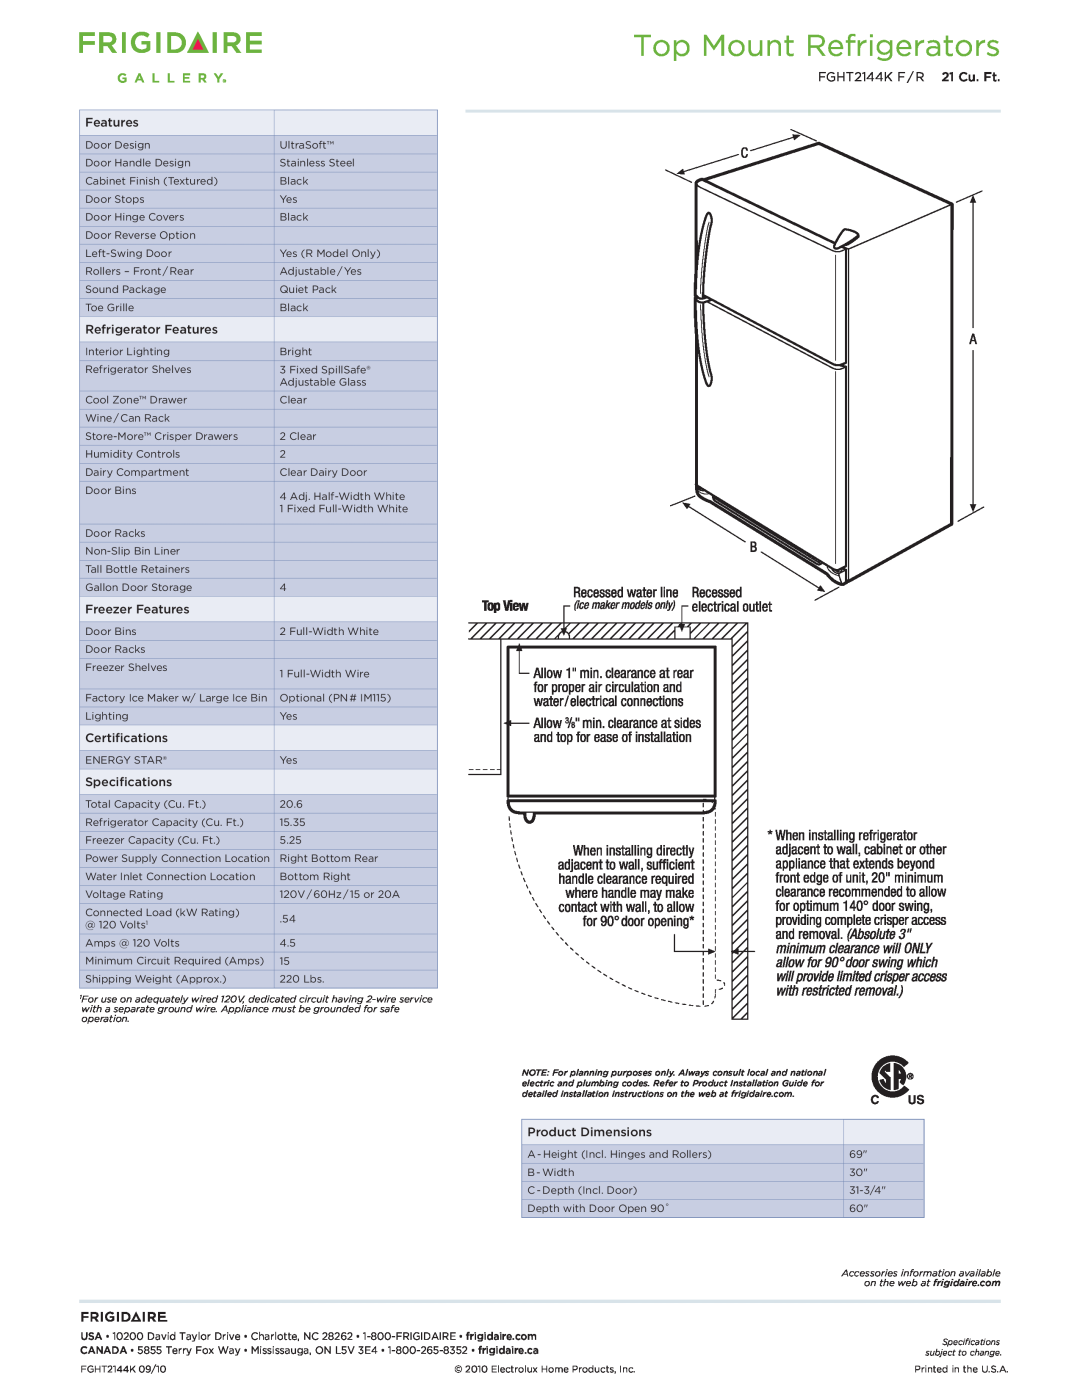 Frigidaire FGHT2144K F/R1 dimensions Top Mount Refrigerators, FGHT2144K F / R 21 Cu. Ft 